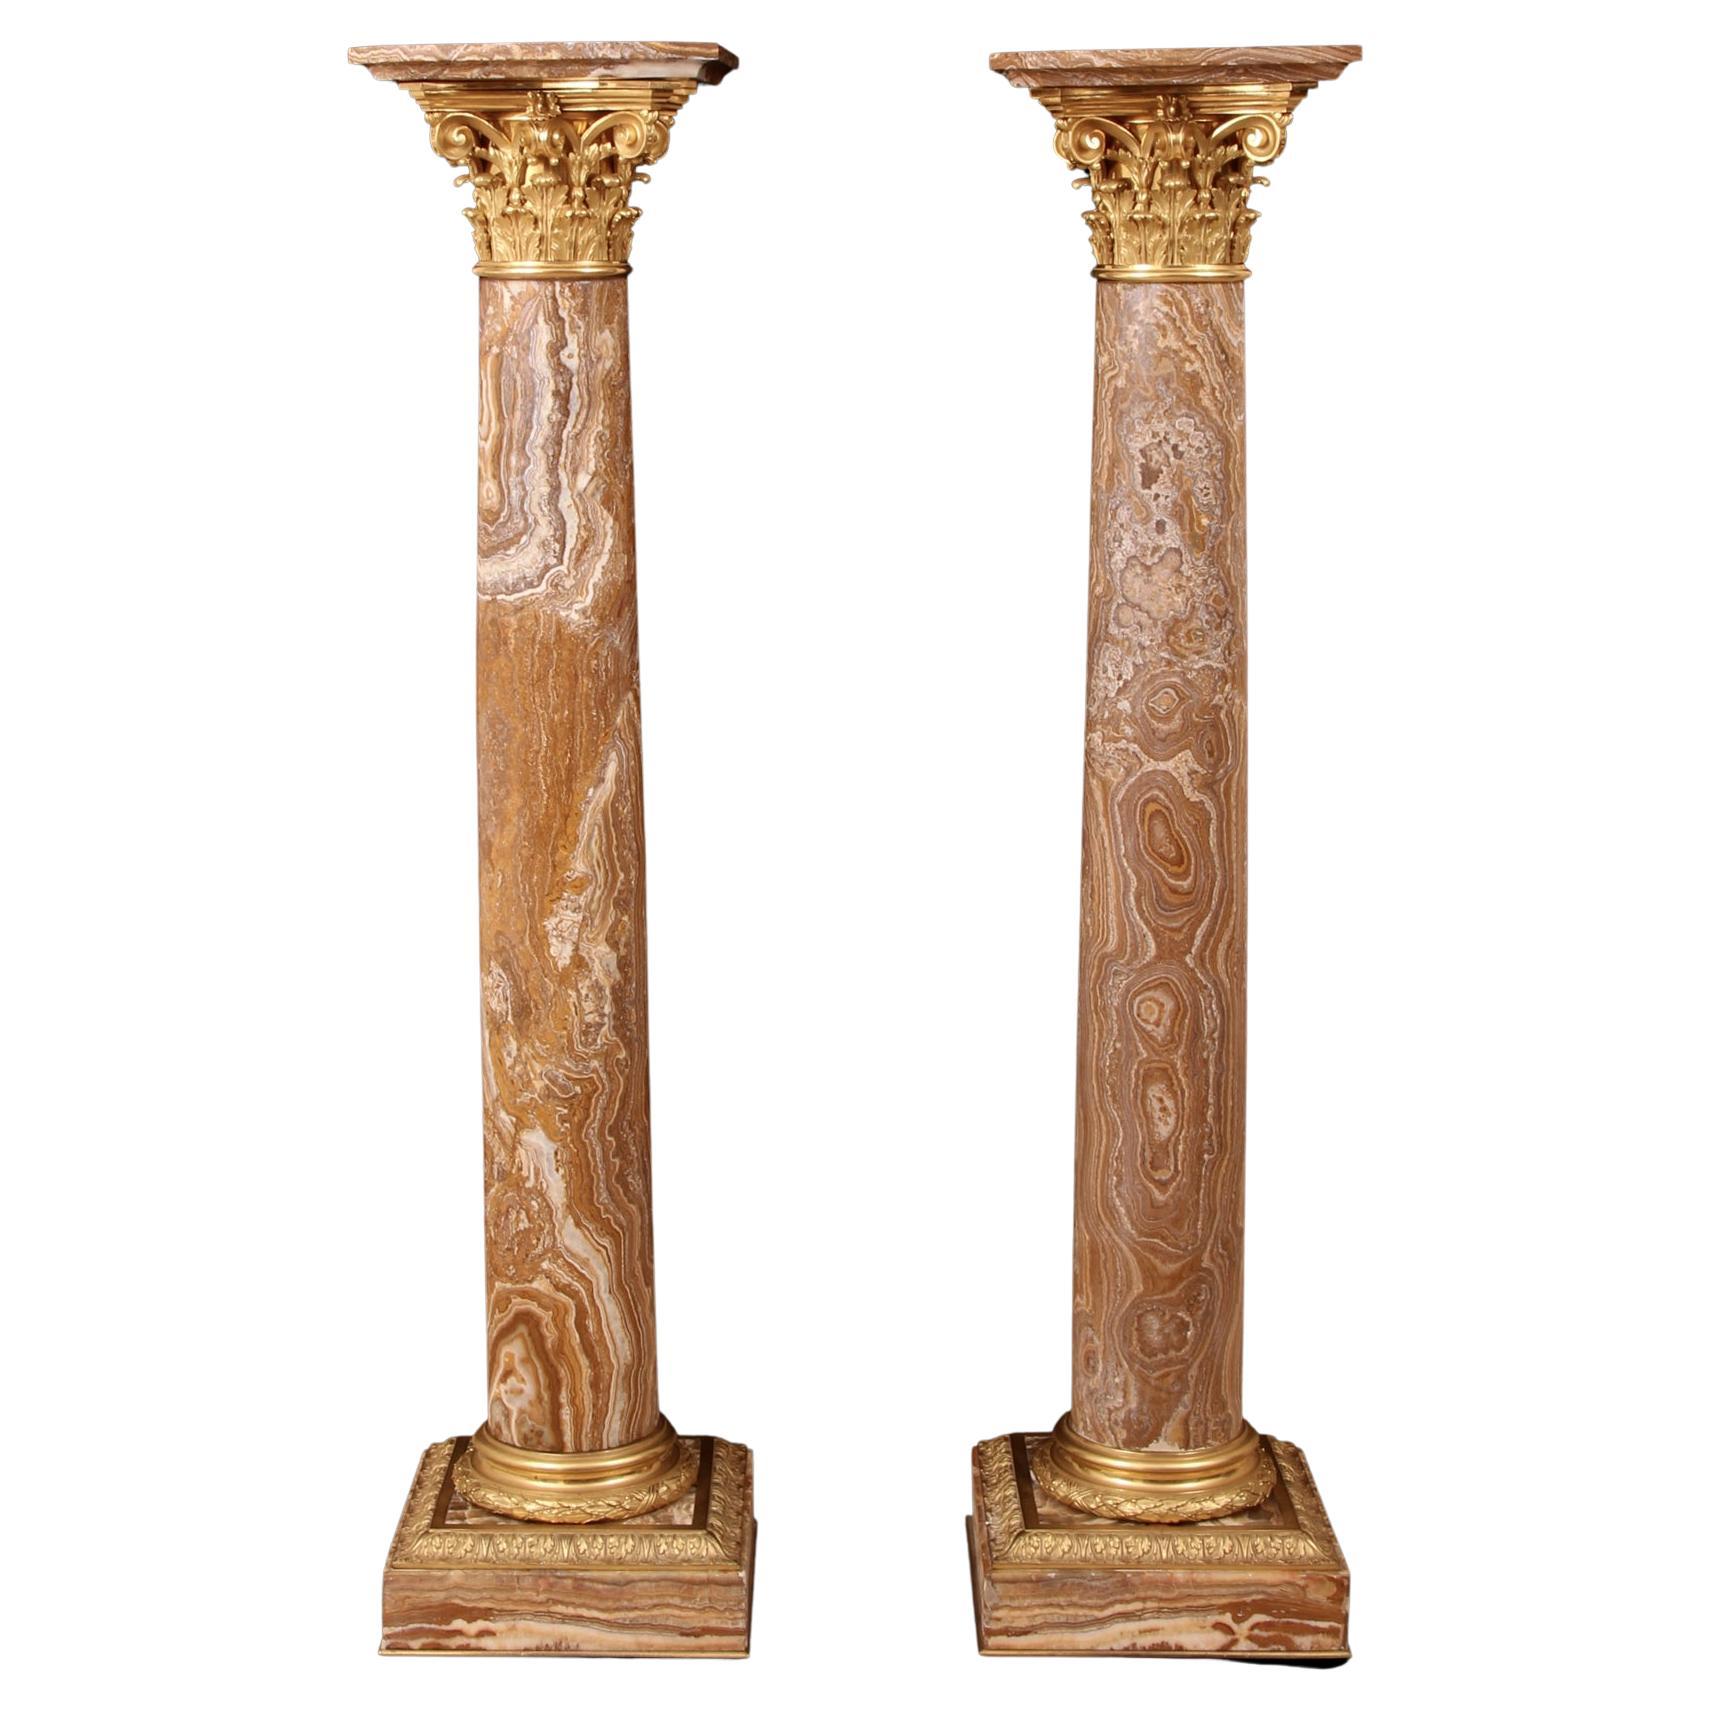 Pair of Louis XVI Style Gilt-Bronze Mounted Pedestals